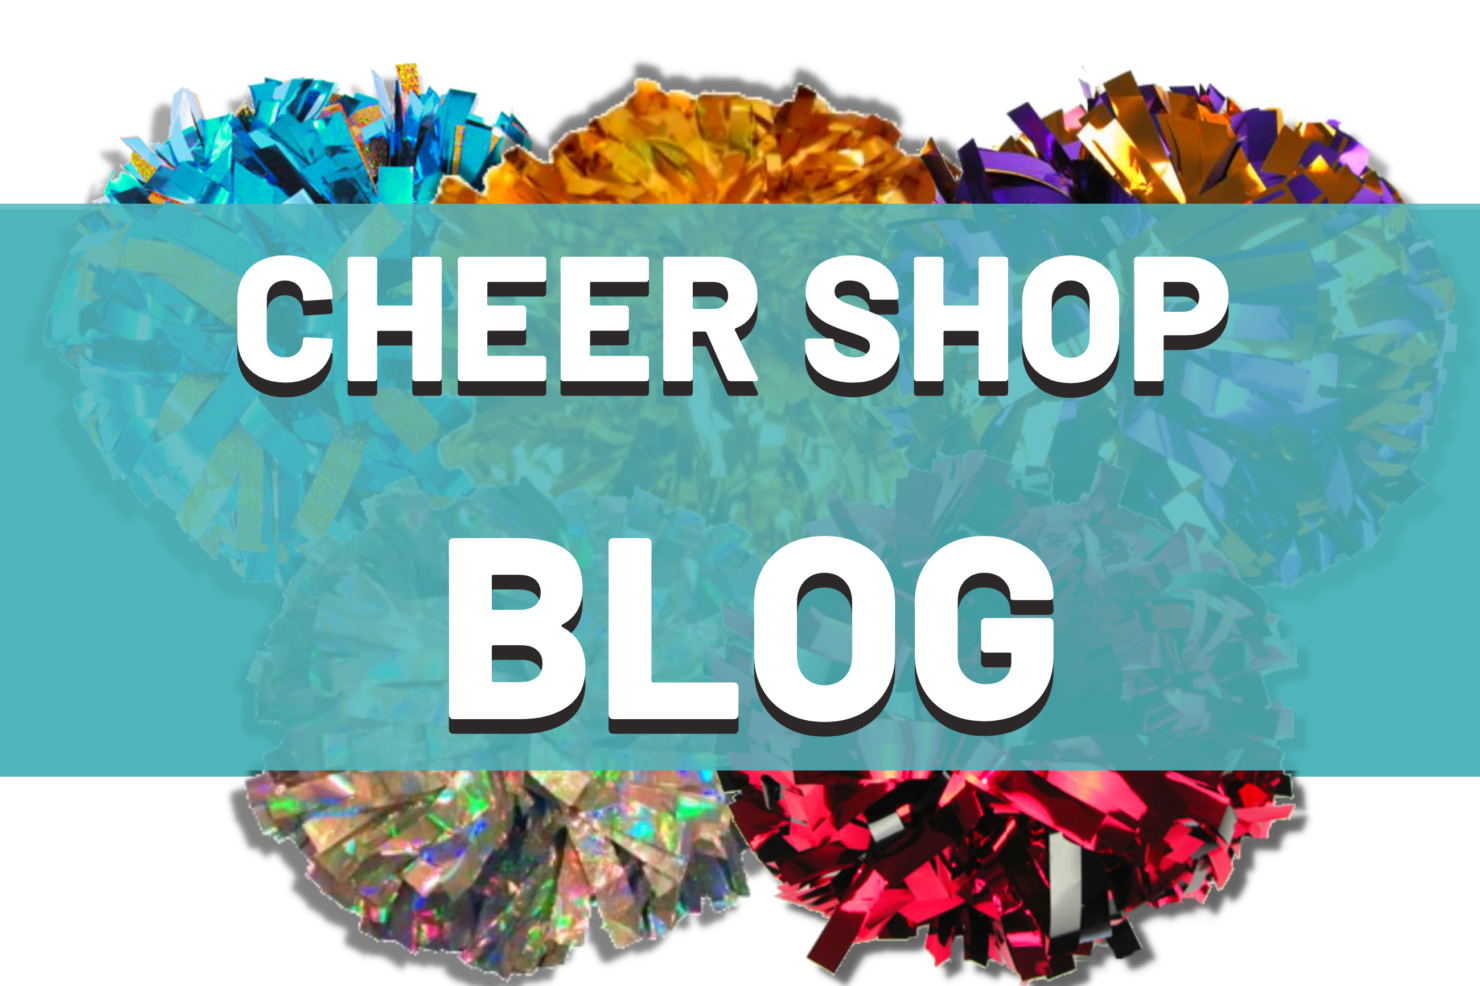 Cheer Shop Blog zakupowy blog dla cheerleaders